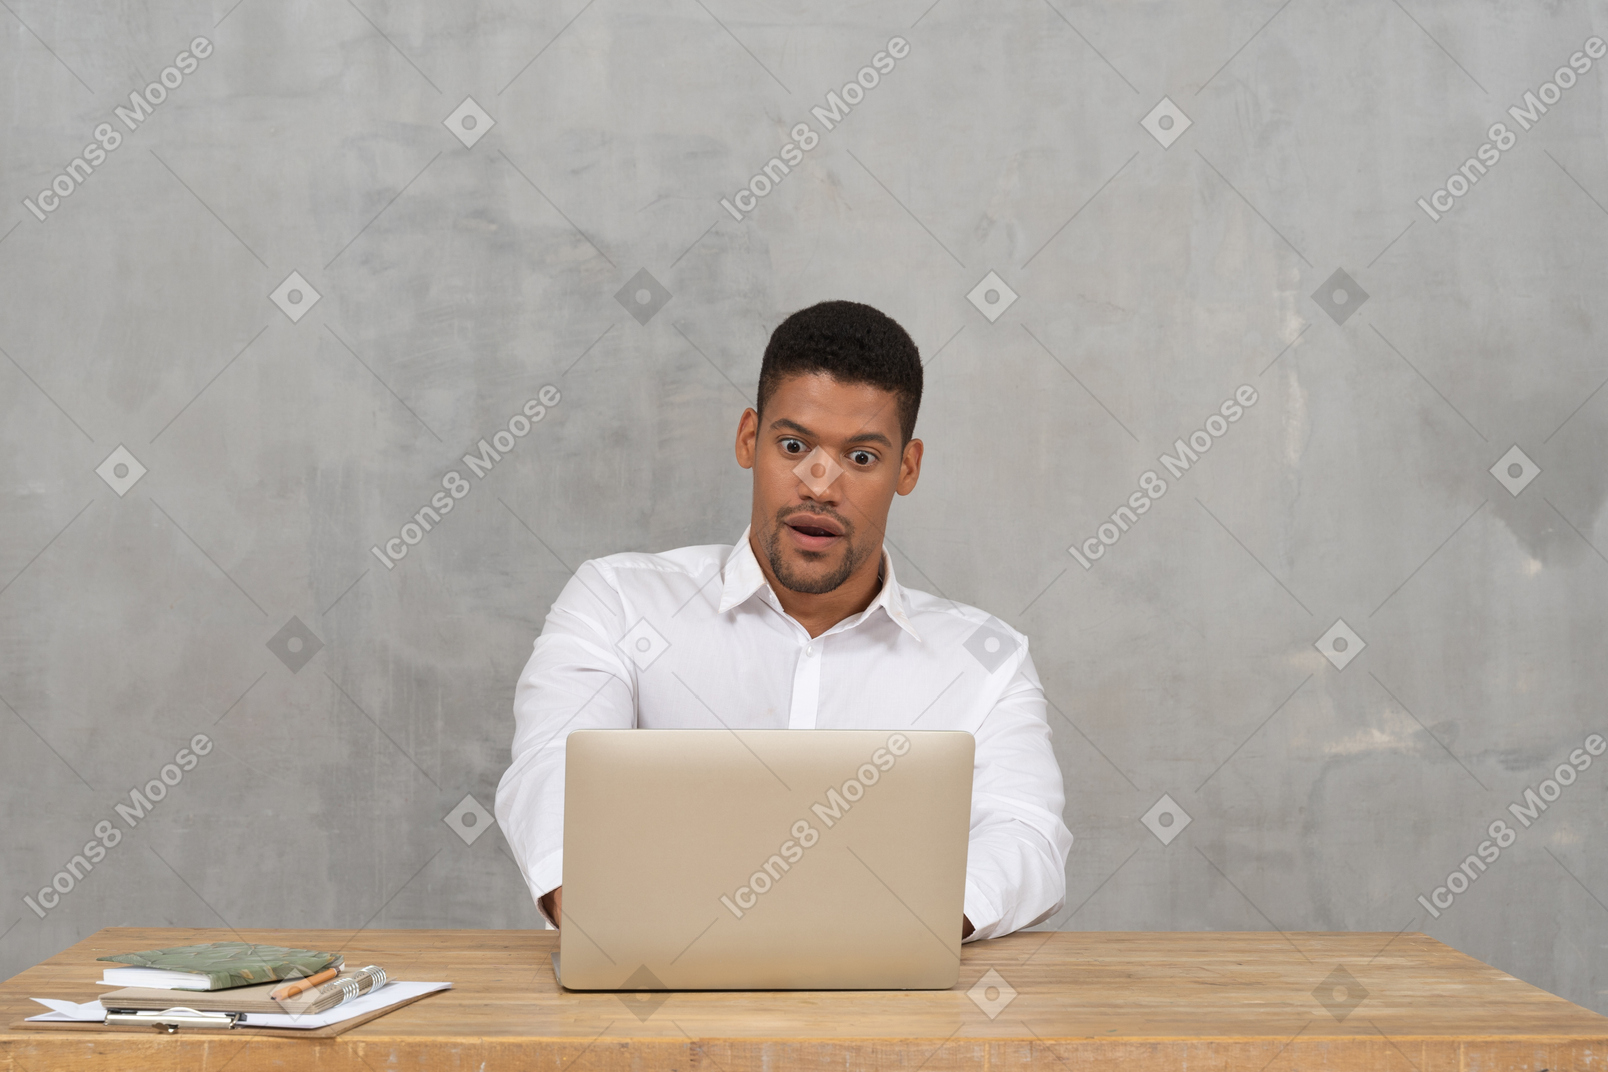 Young man looking at laptop